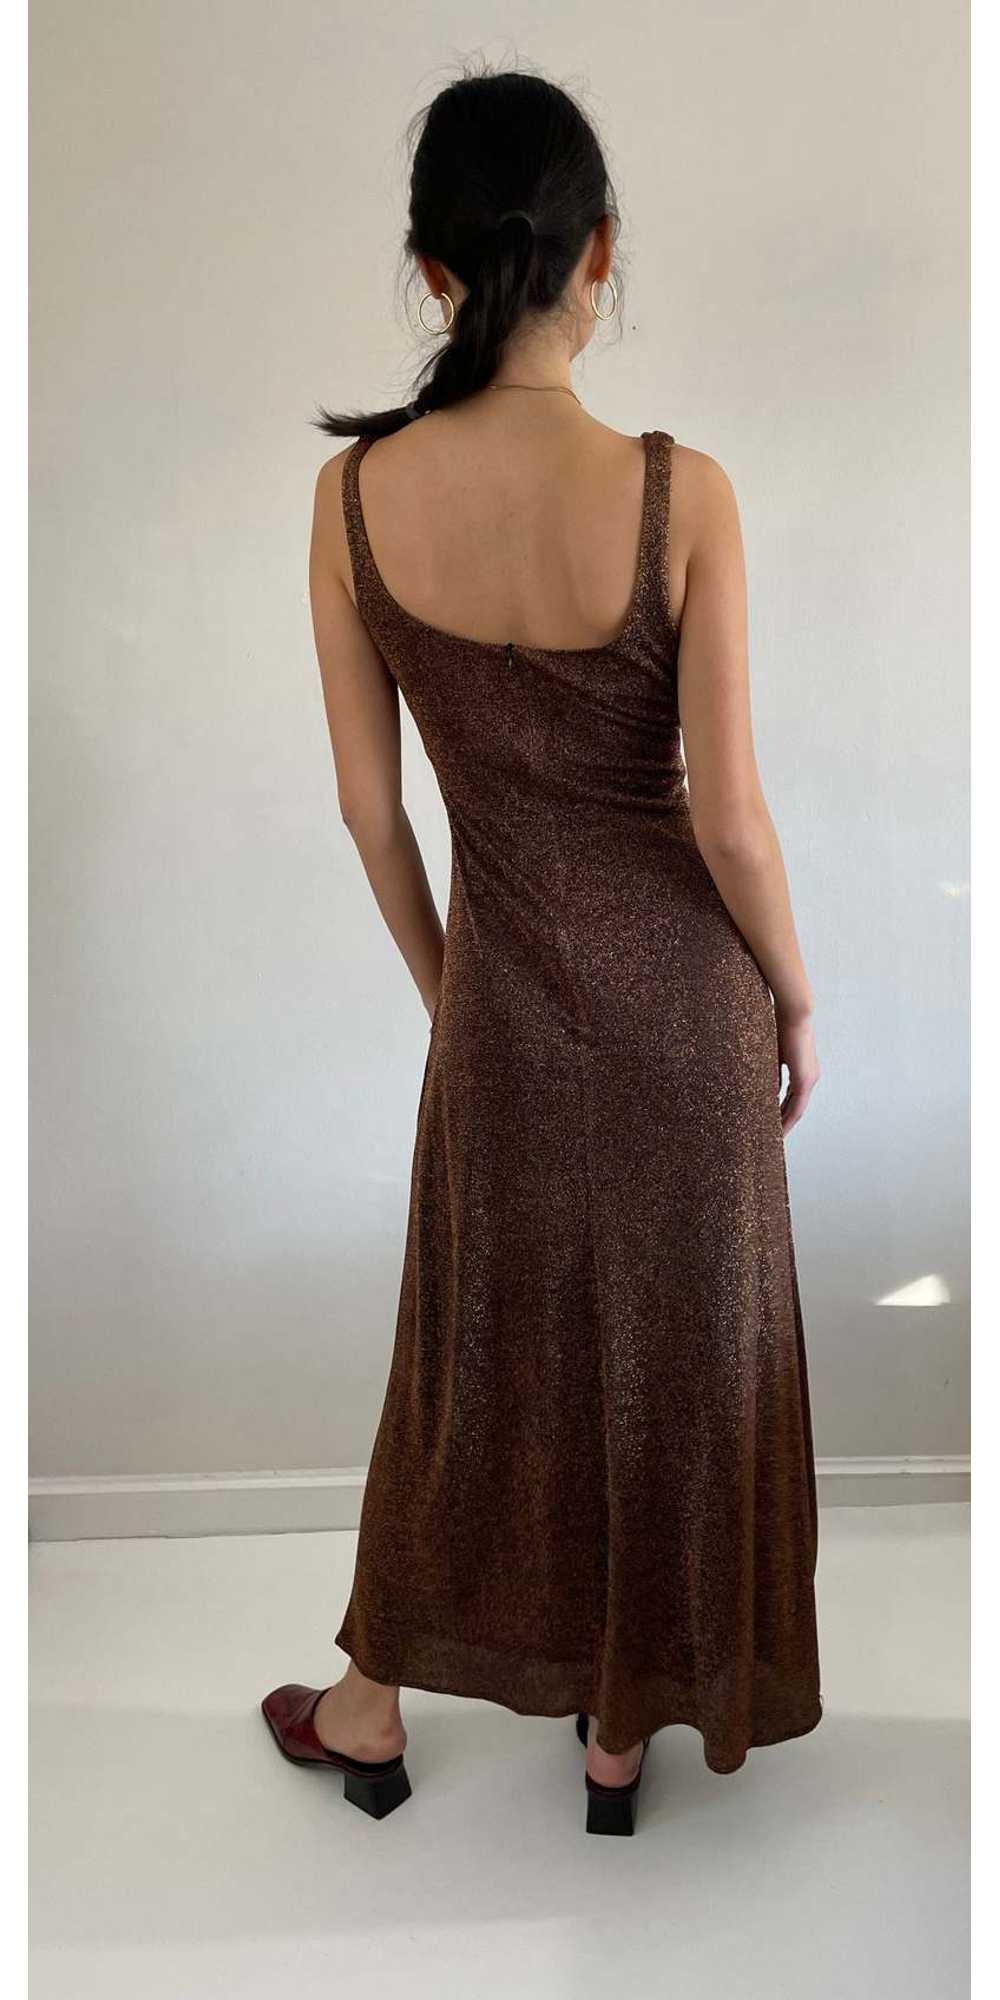 Sleeveless bronze maxi dress - image 10